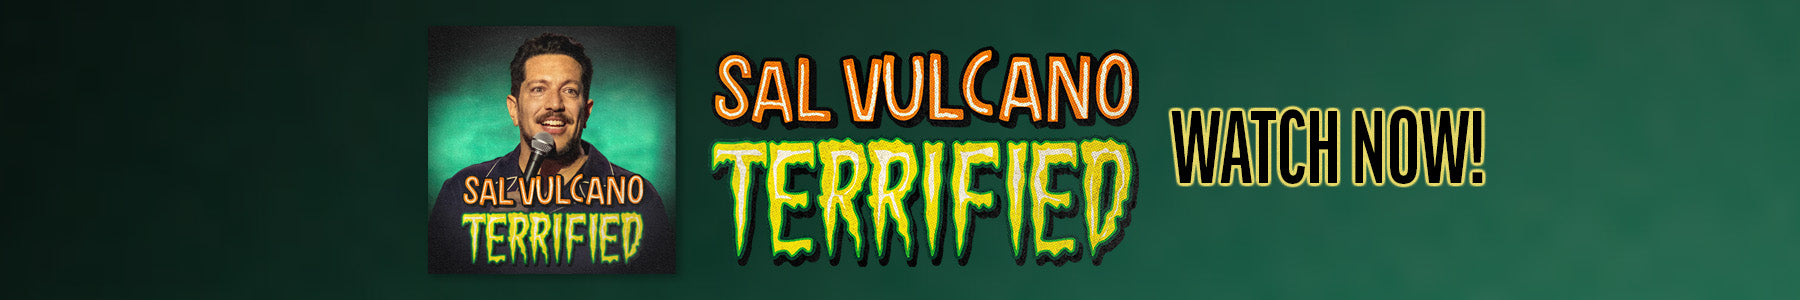 Sal Vulcano Banner Image